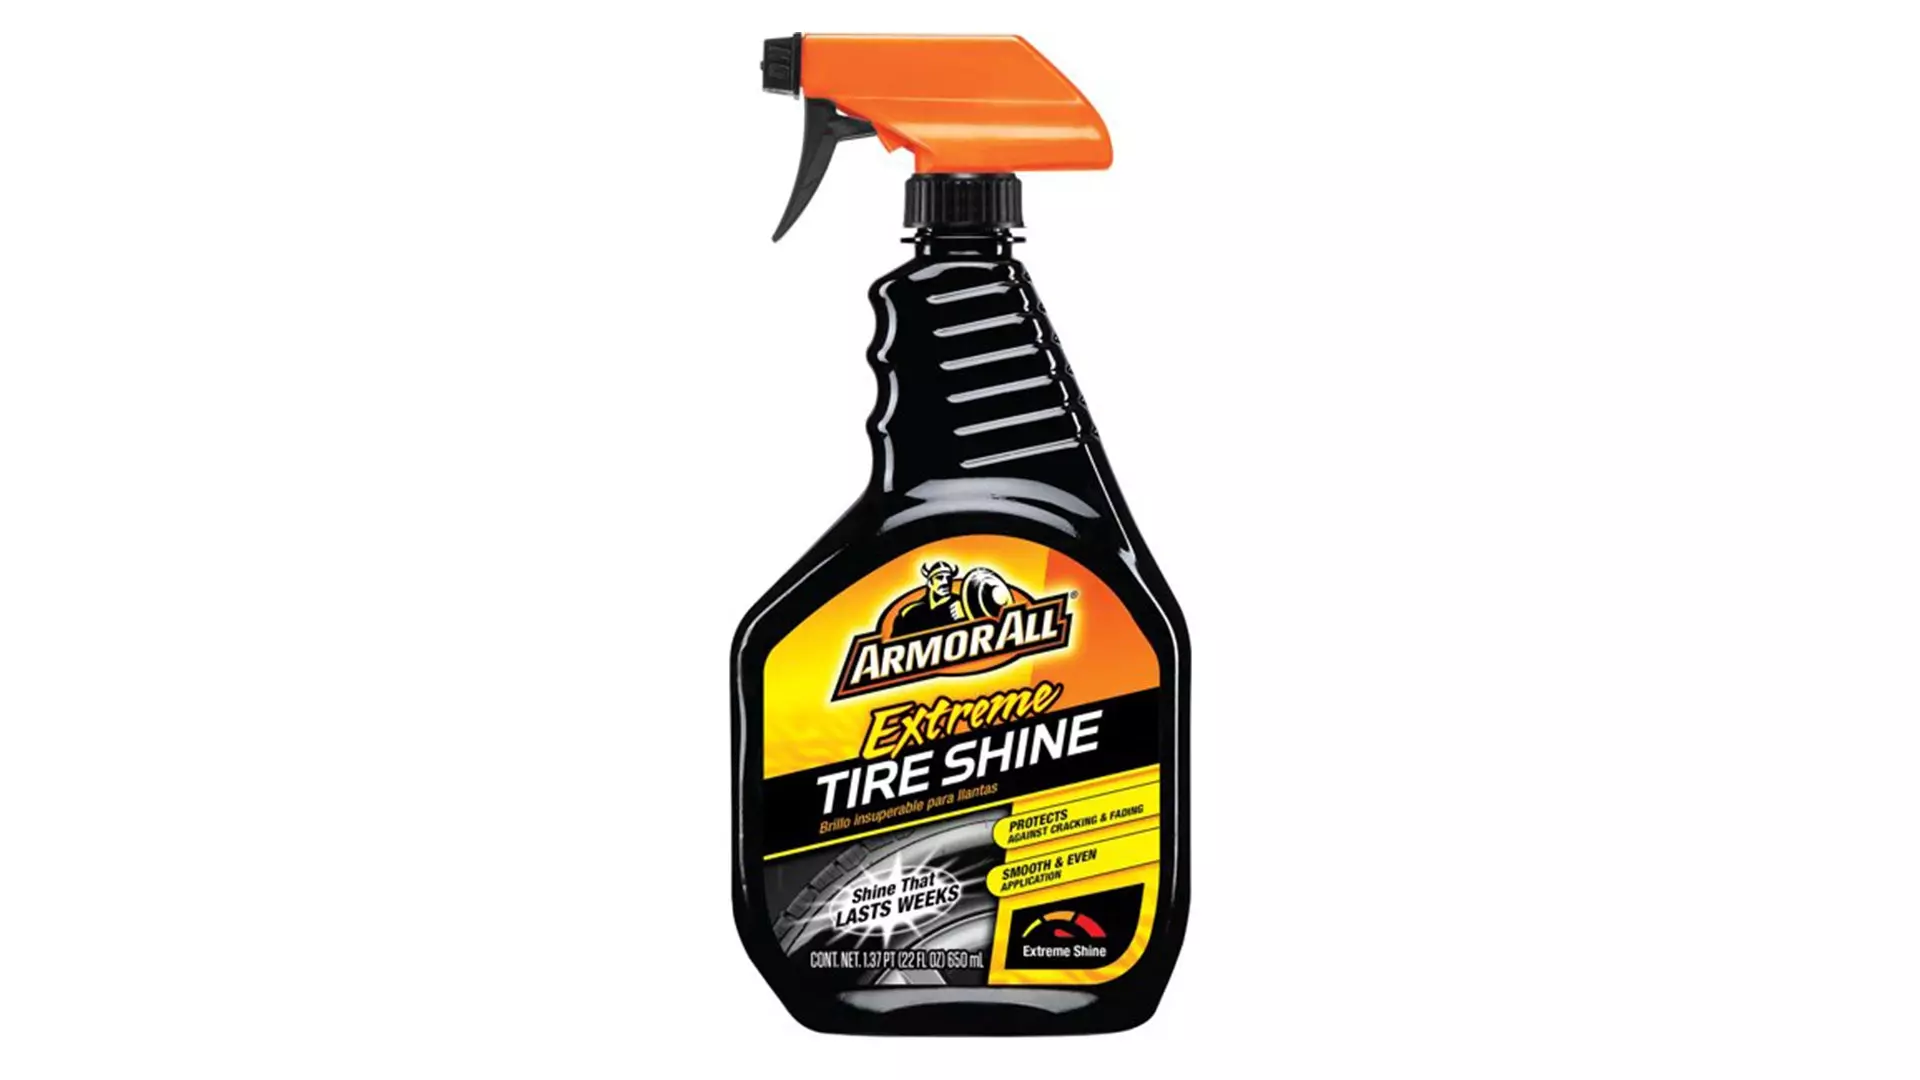 Armor All Extreme Tire Shine Spray